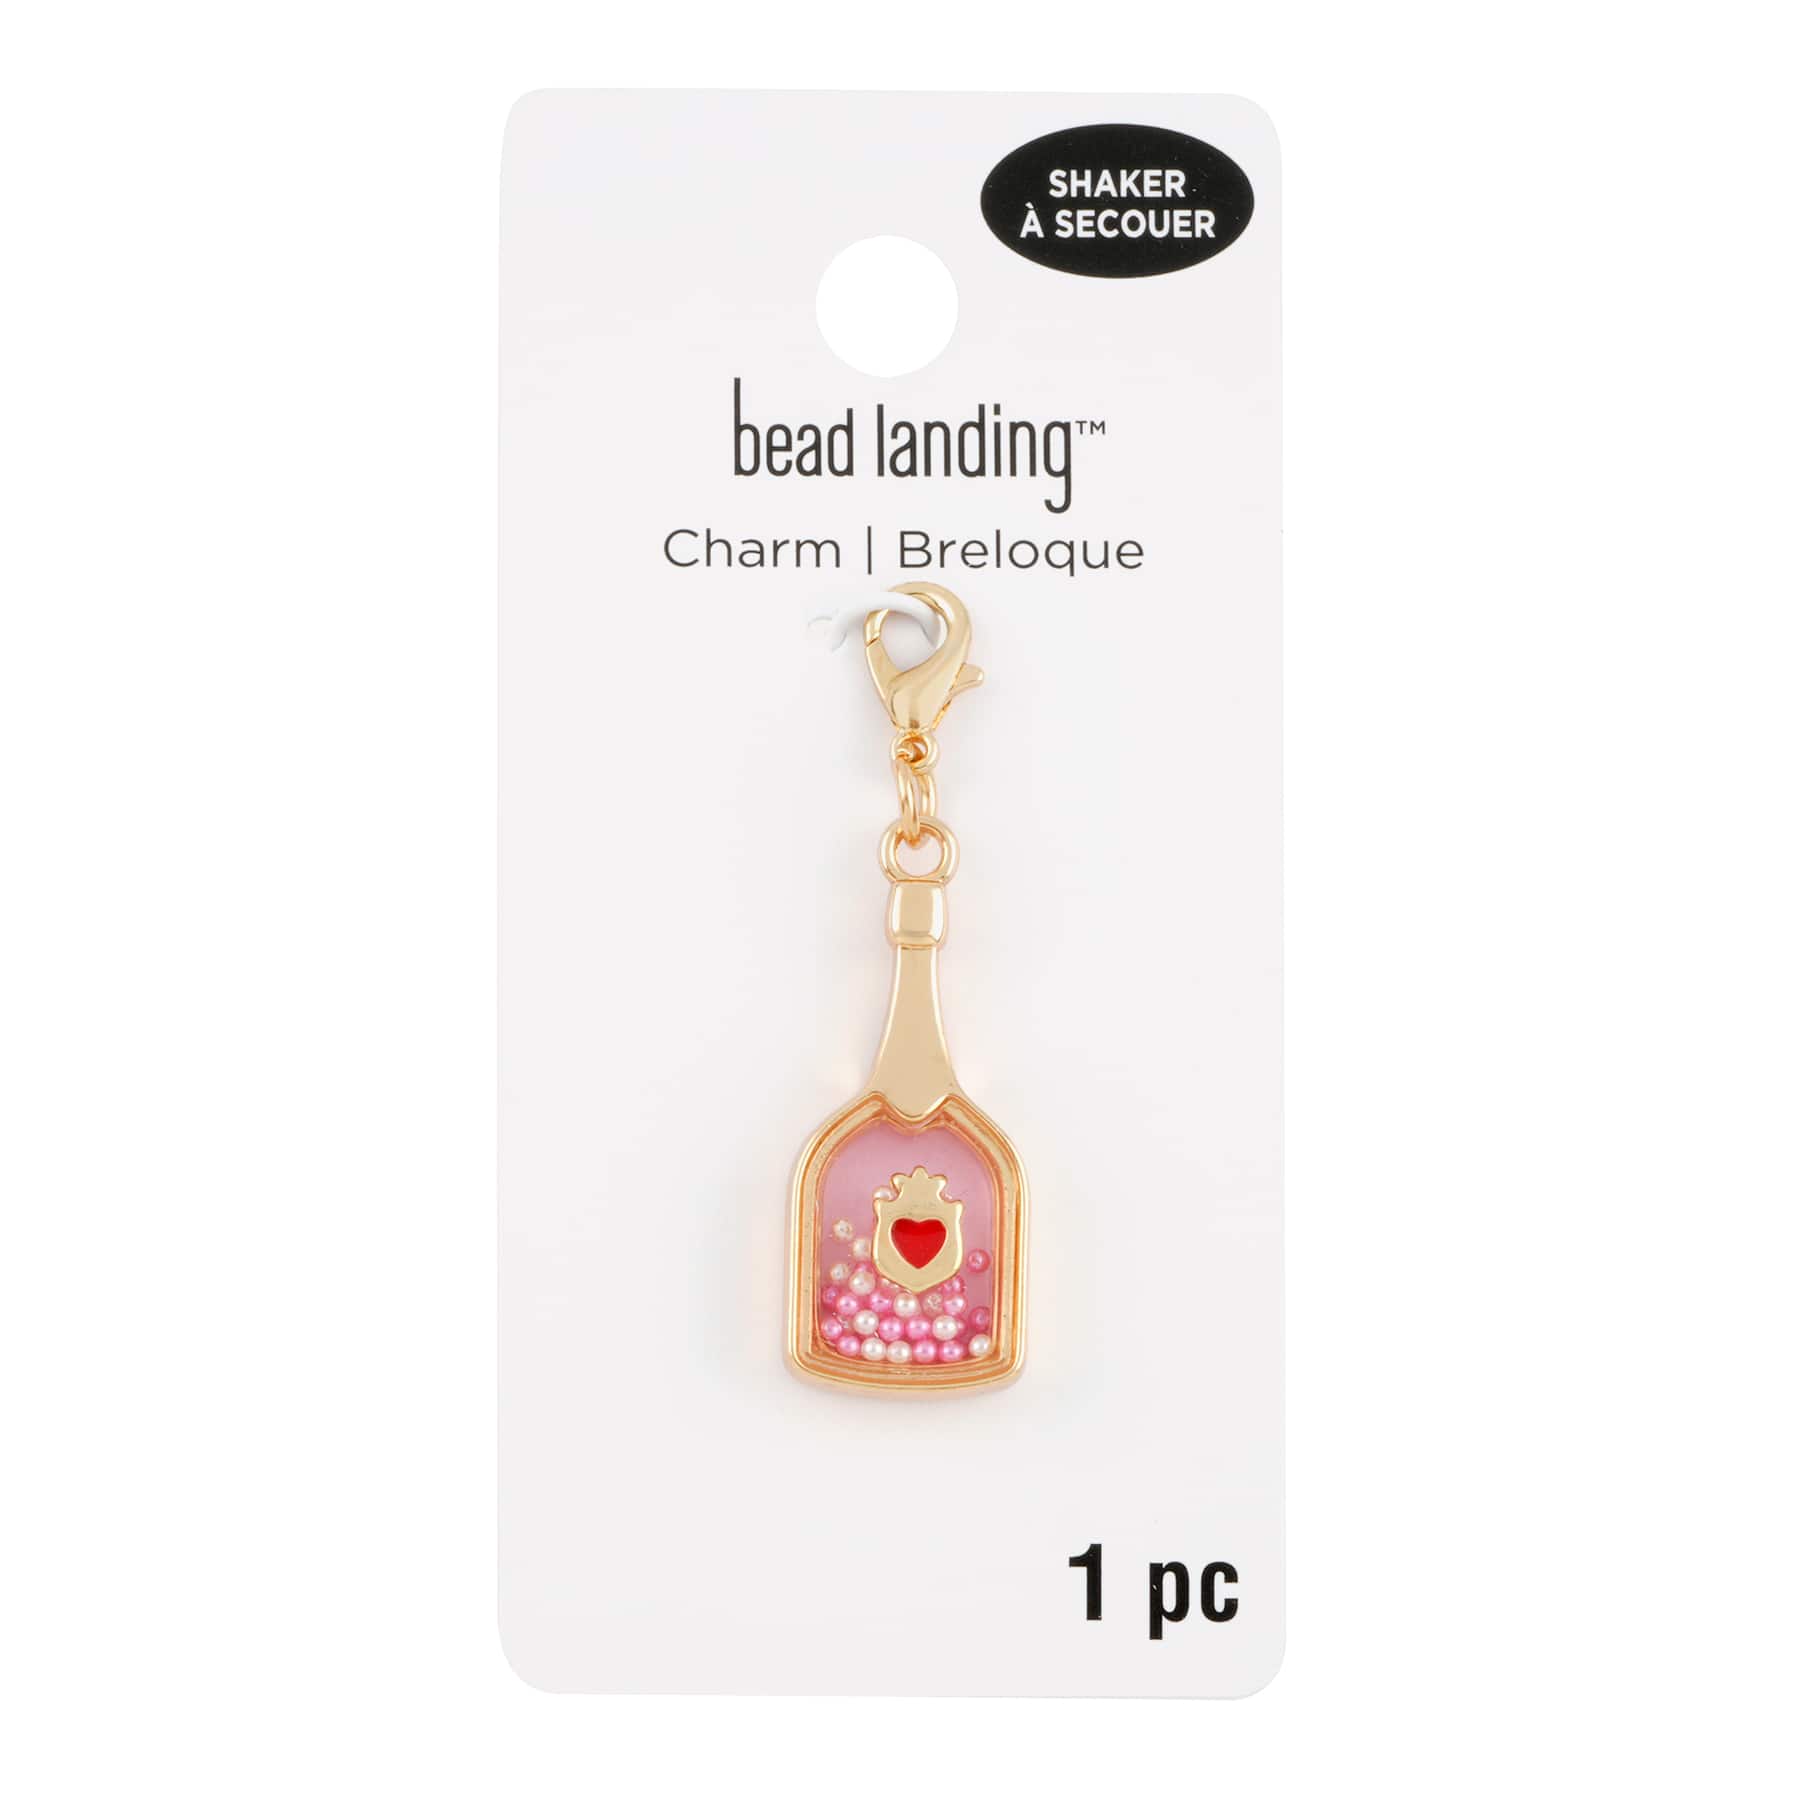 Champagne Bottle Shaker Charm by Bead Landing&#x2122;